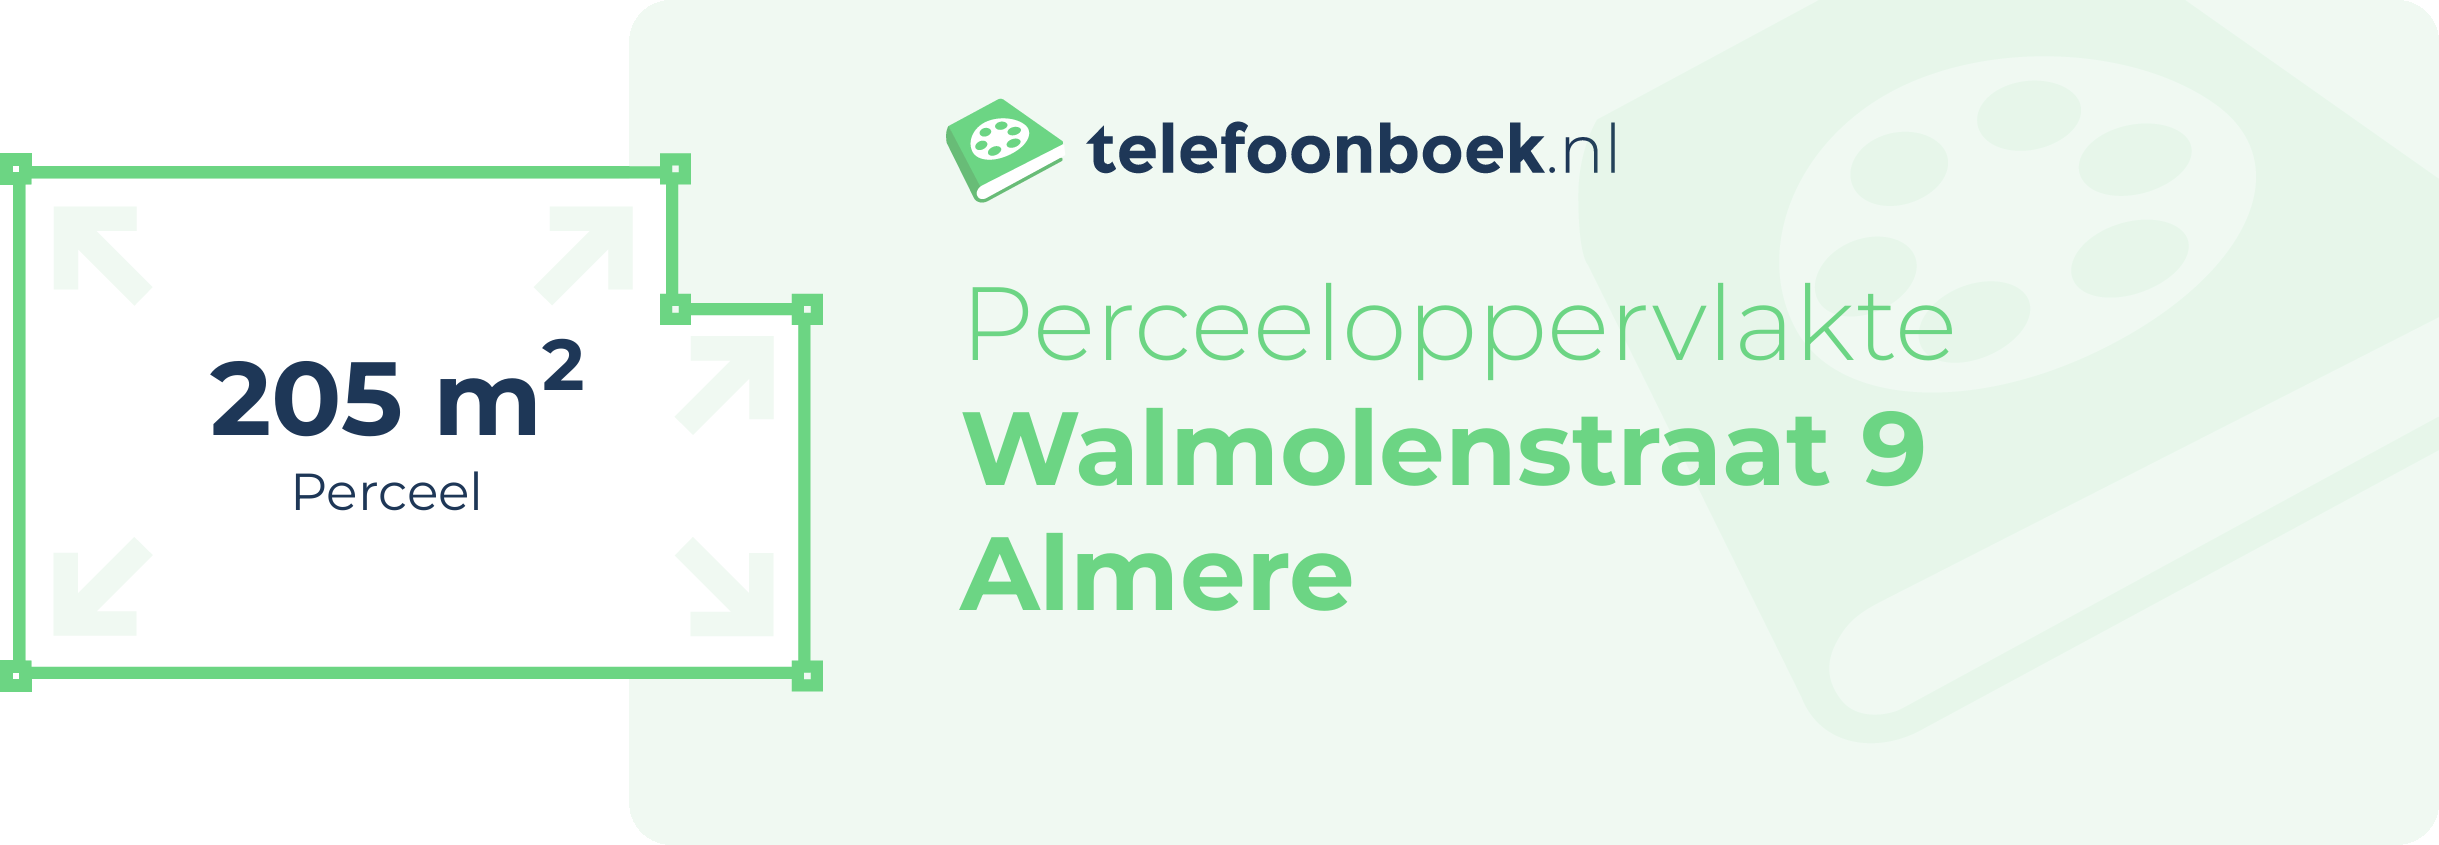 Perceeloppervlakte Walmolenstraat 9 Almere